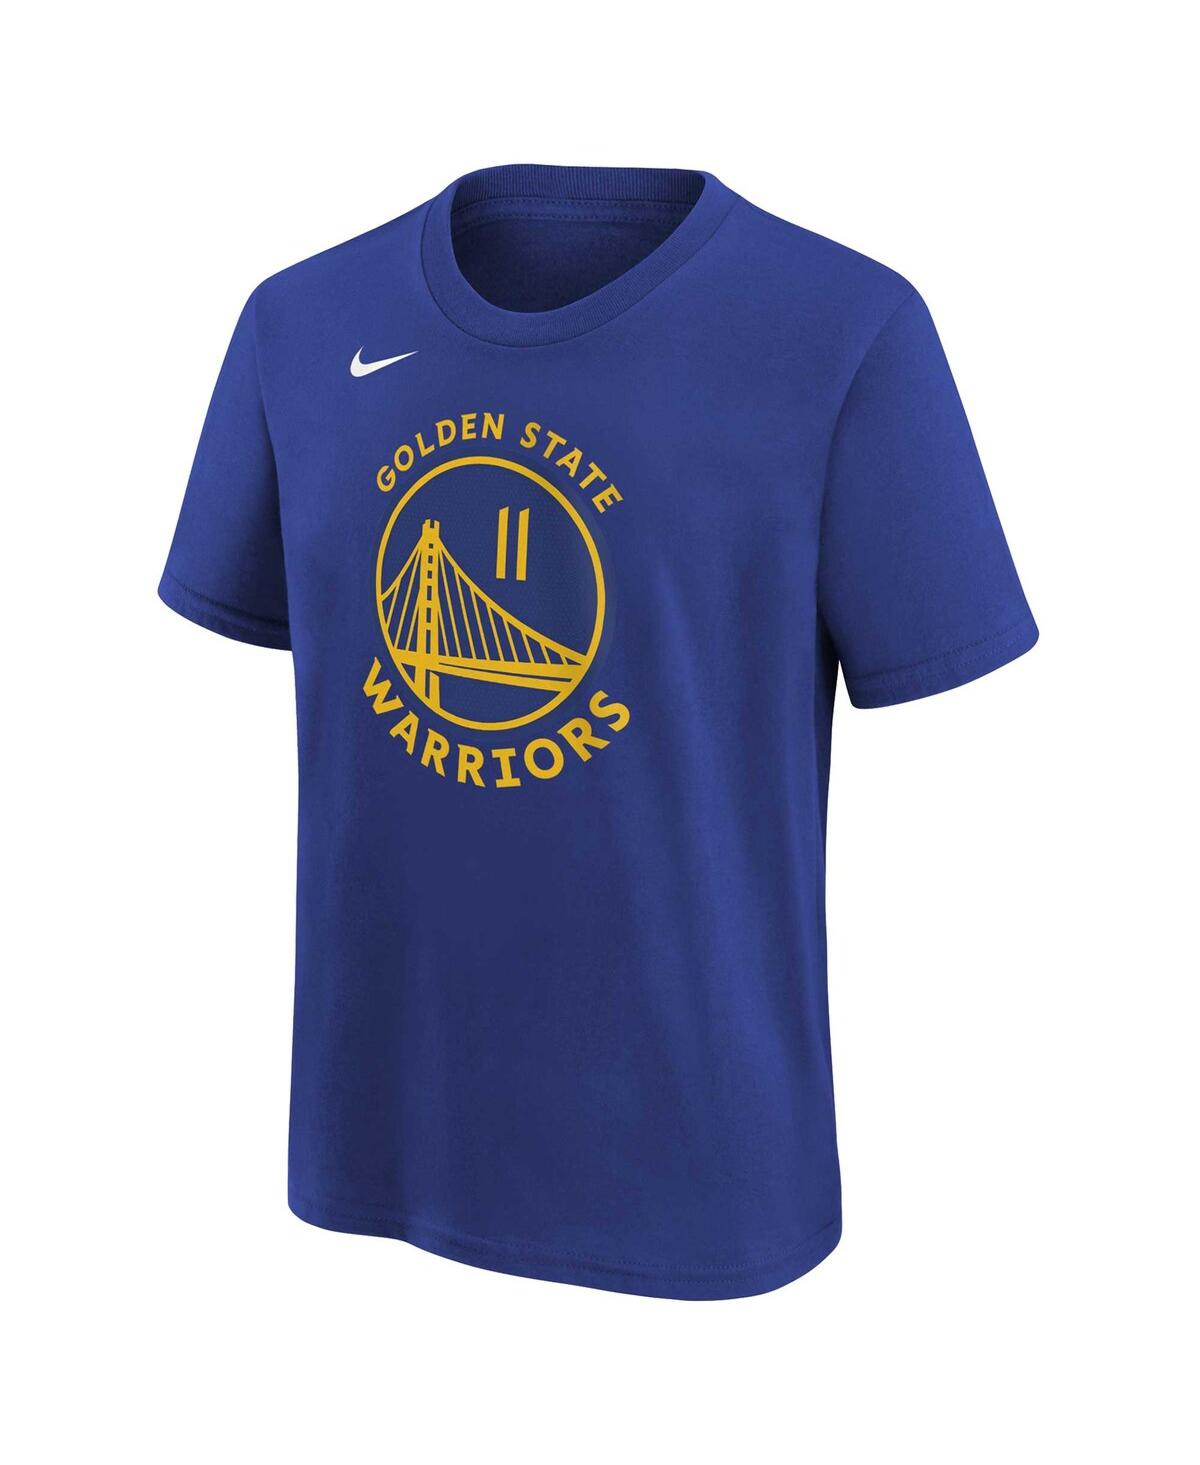 Golden State Warriors Nike Gear, Nike Warriors Store, Golden State